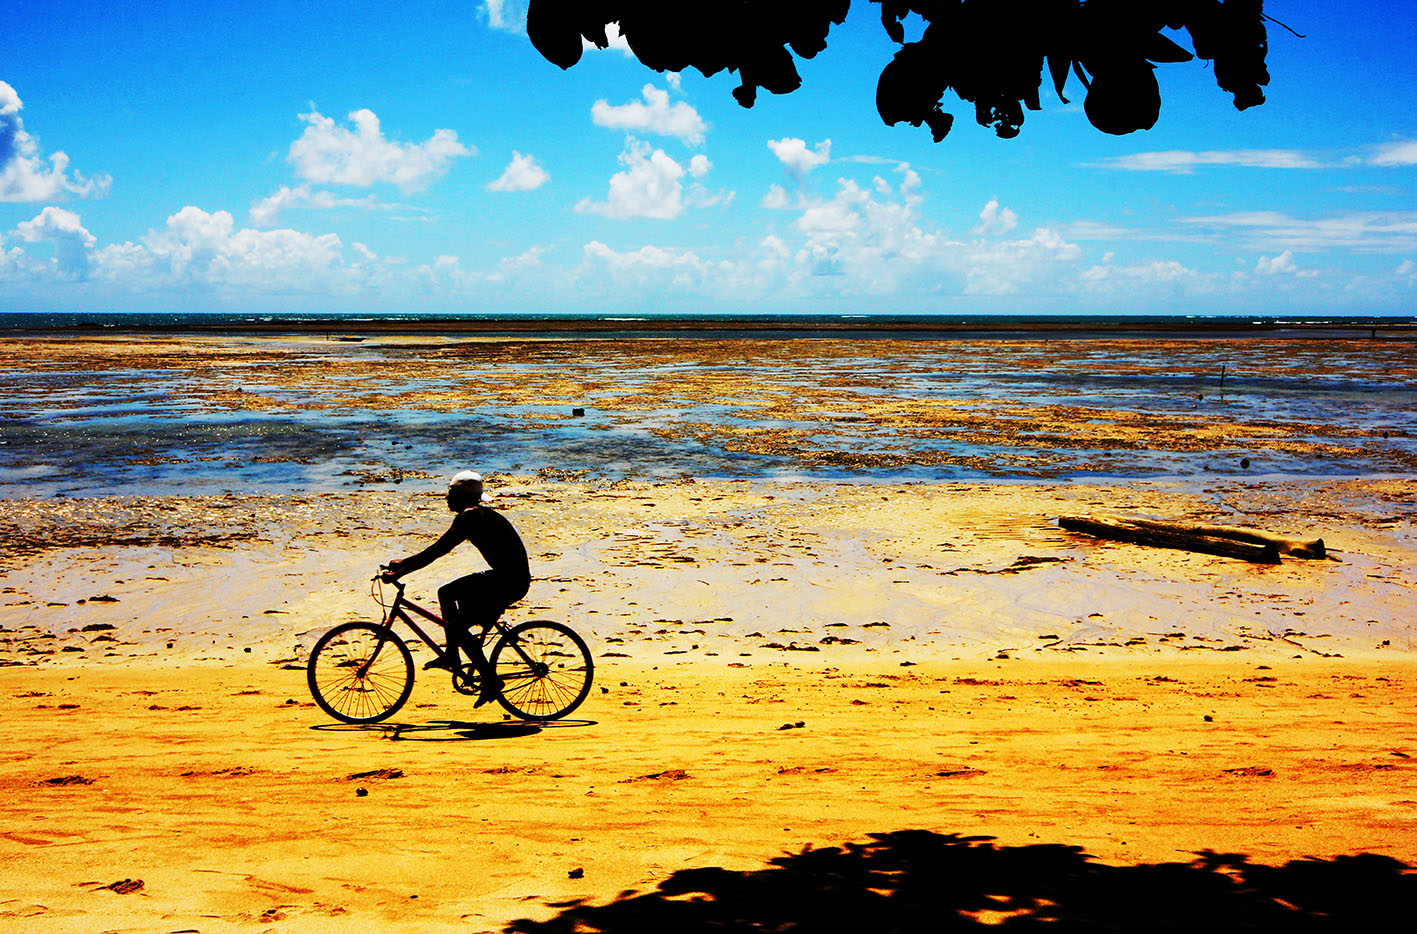 Baihia Bike Dreams - Brasil - Feel Good Images © Chris Christoforou